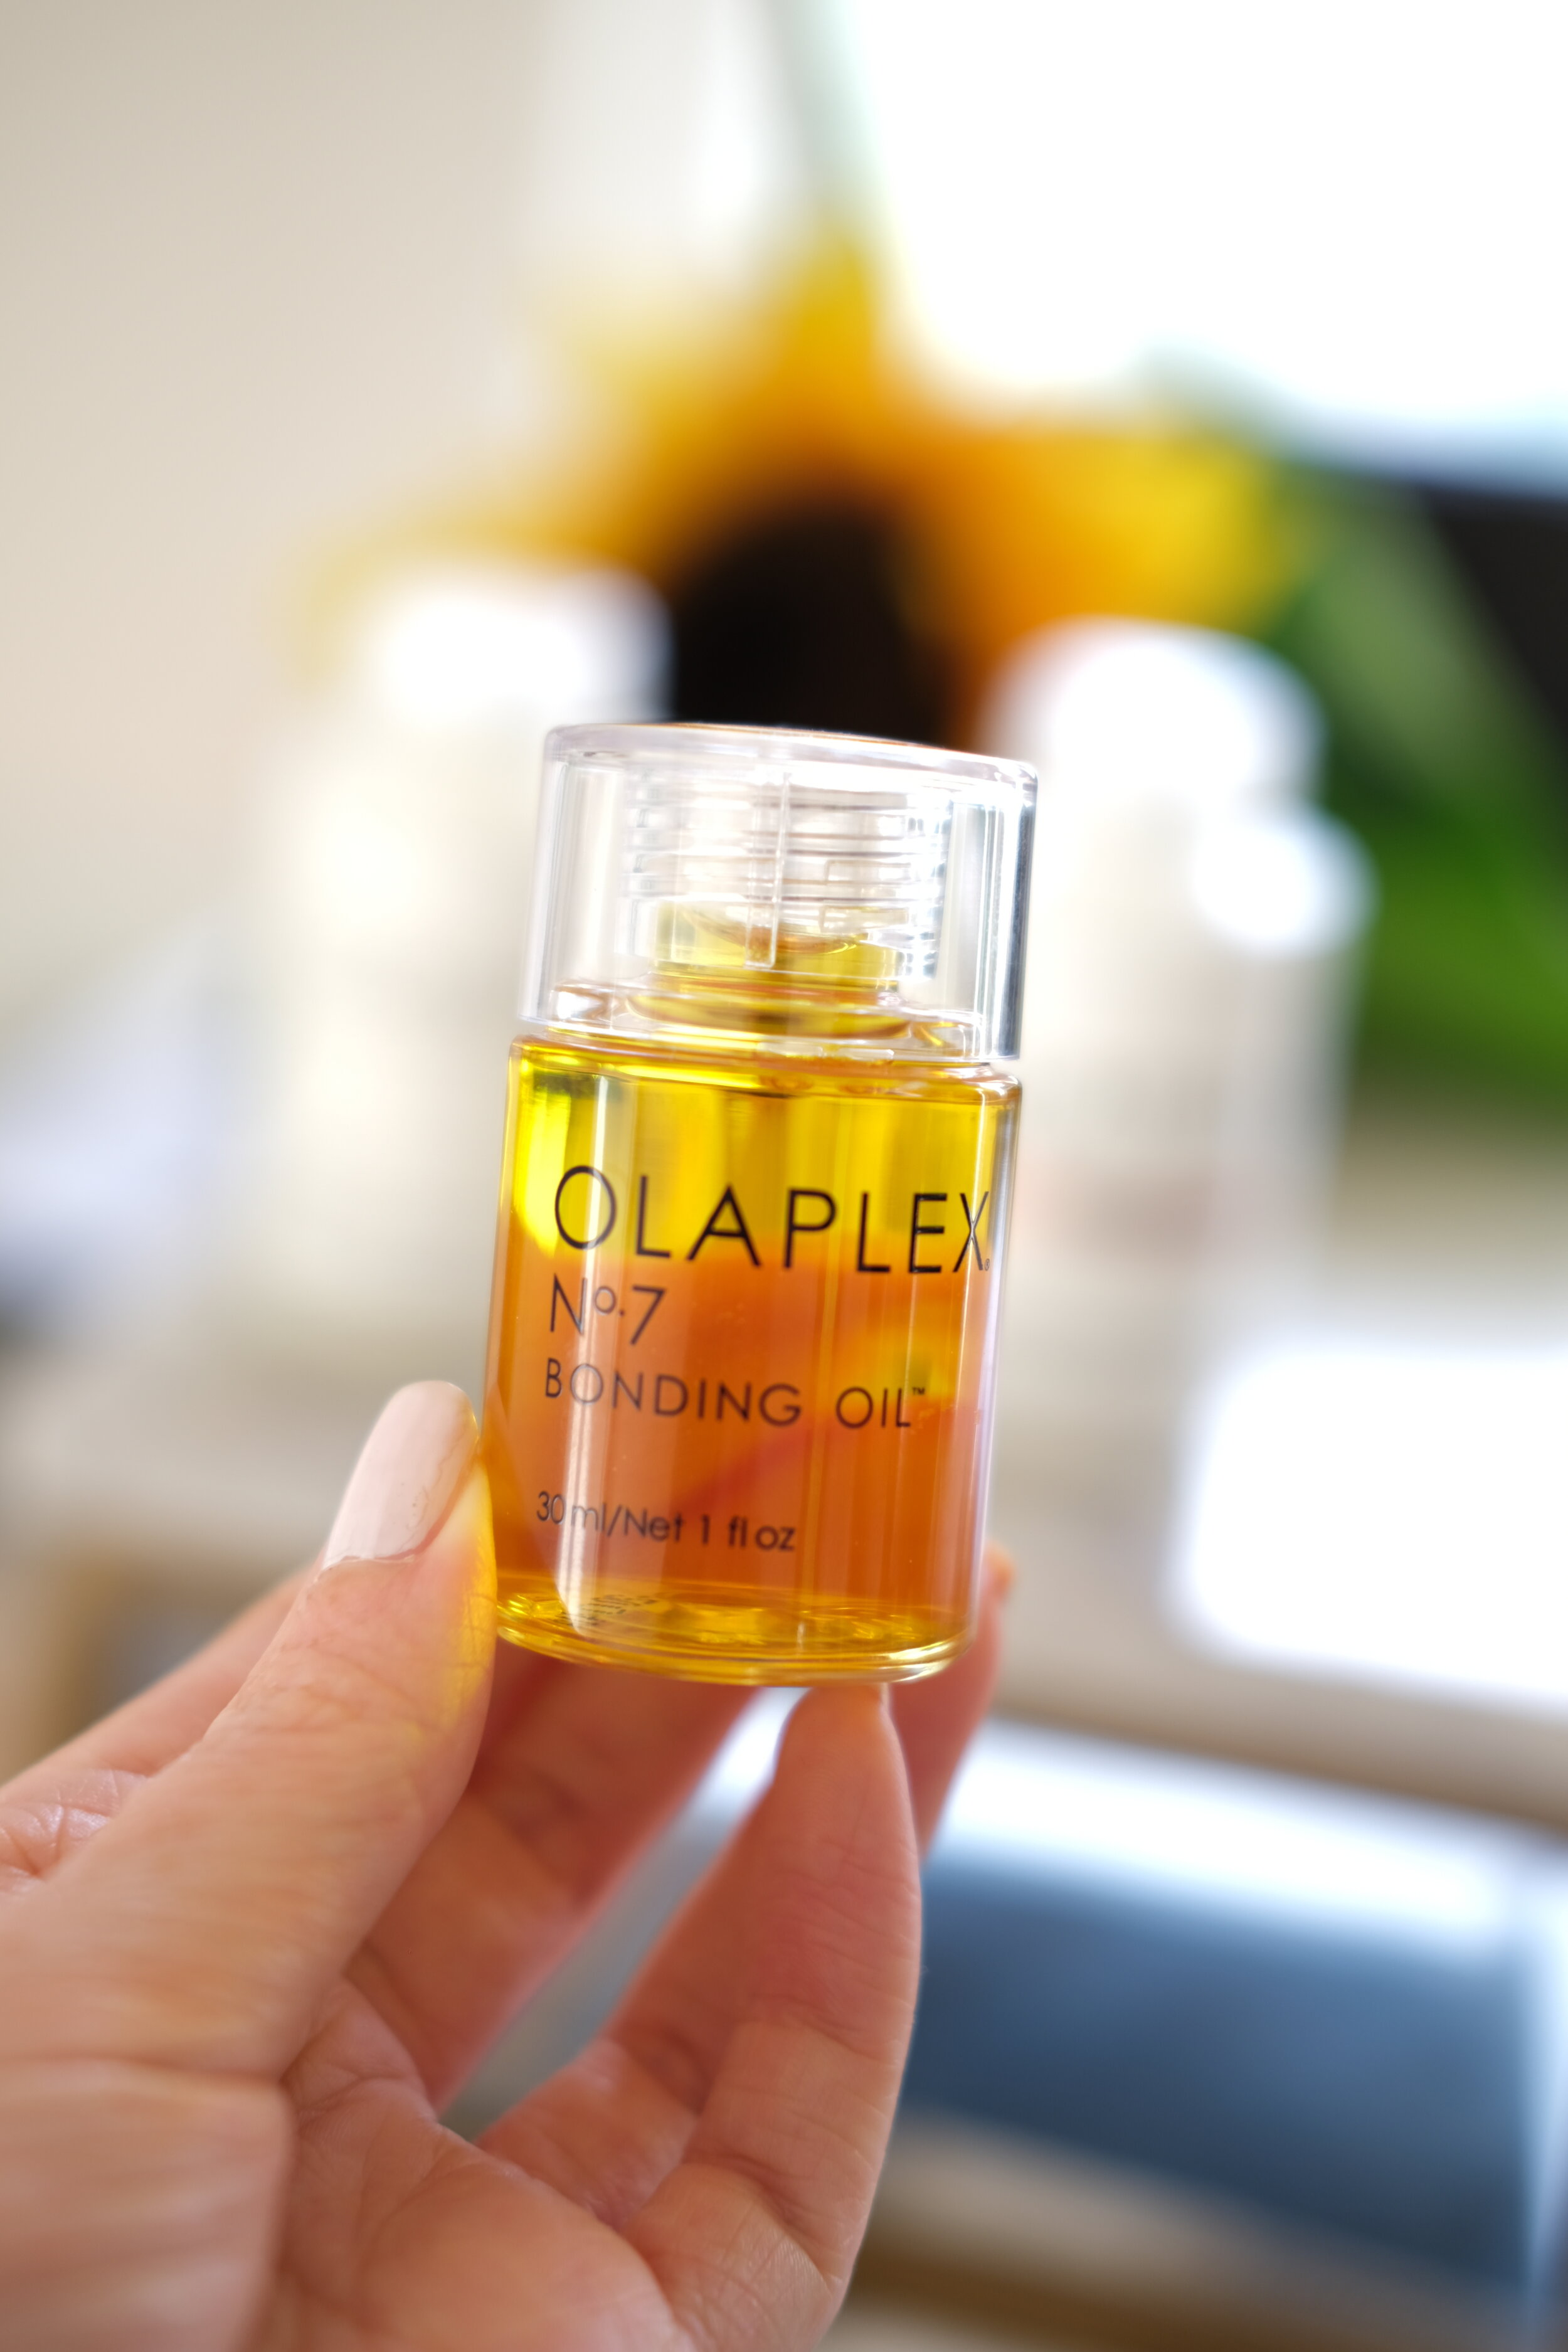 Olaplex Hair Review - Olaplex No.7 Bonding Oil